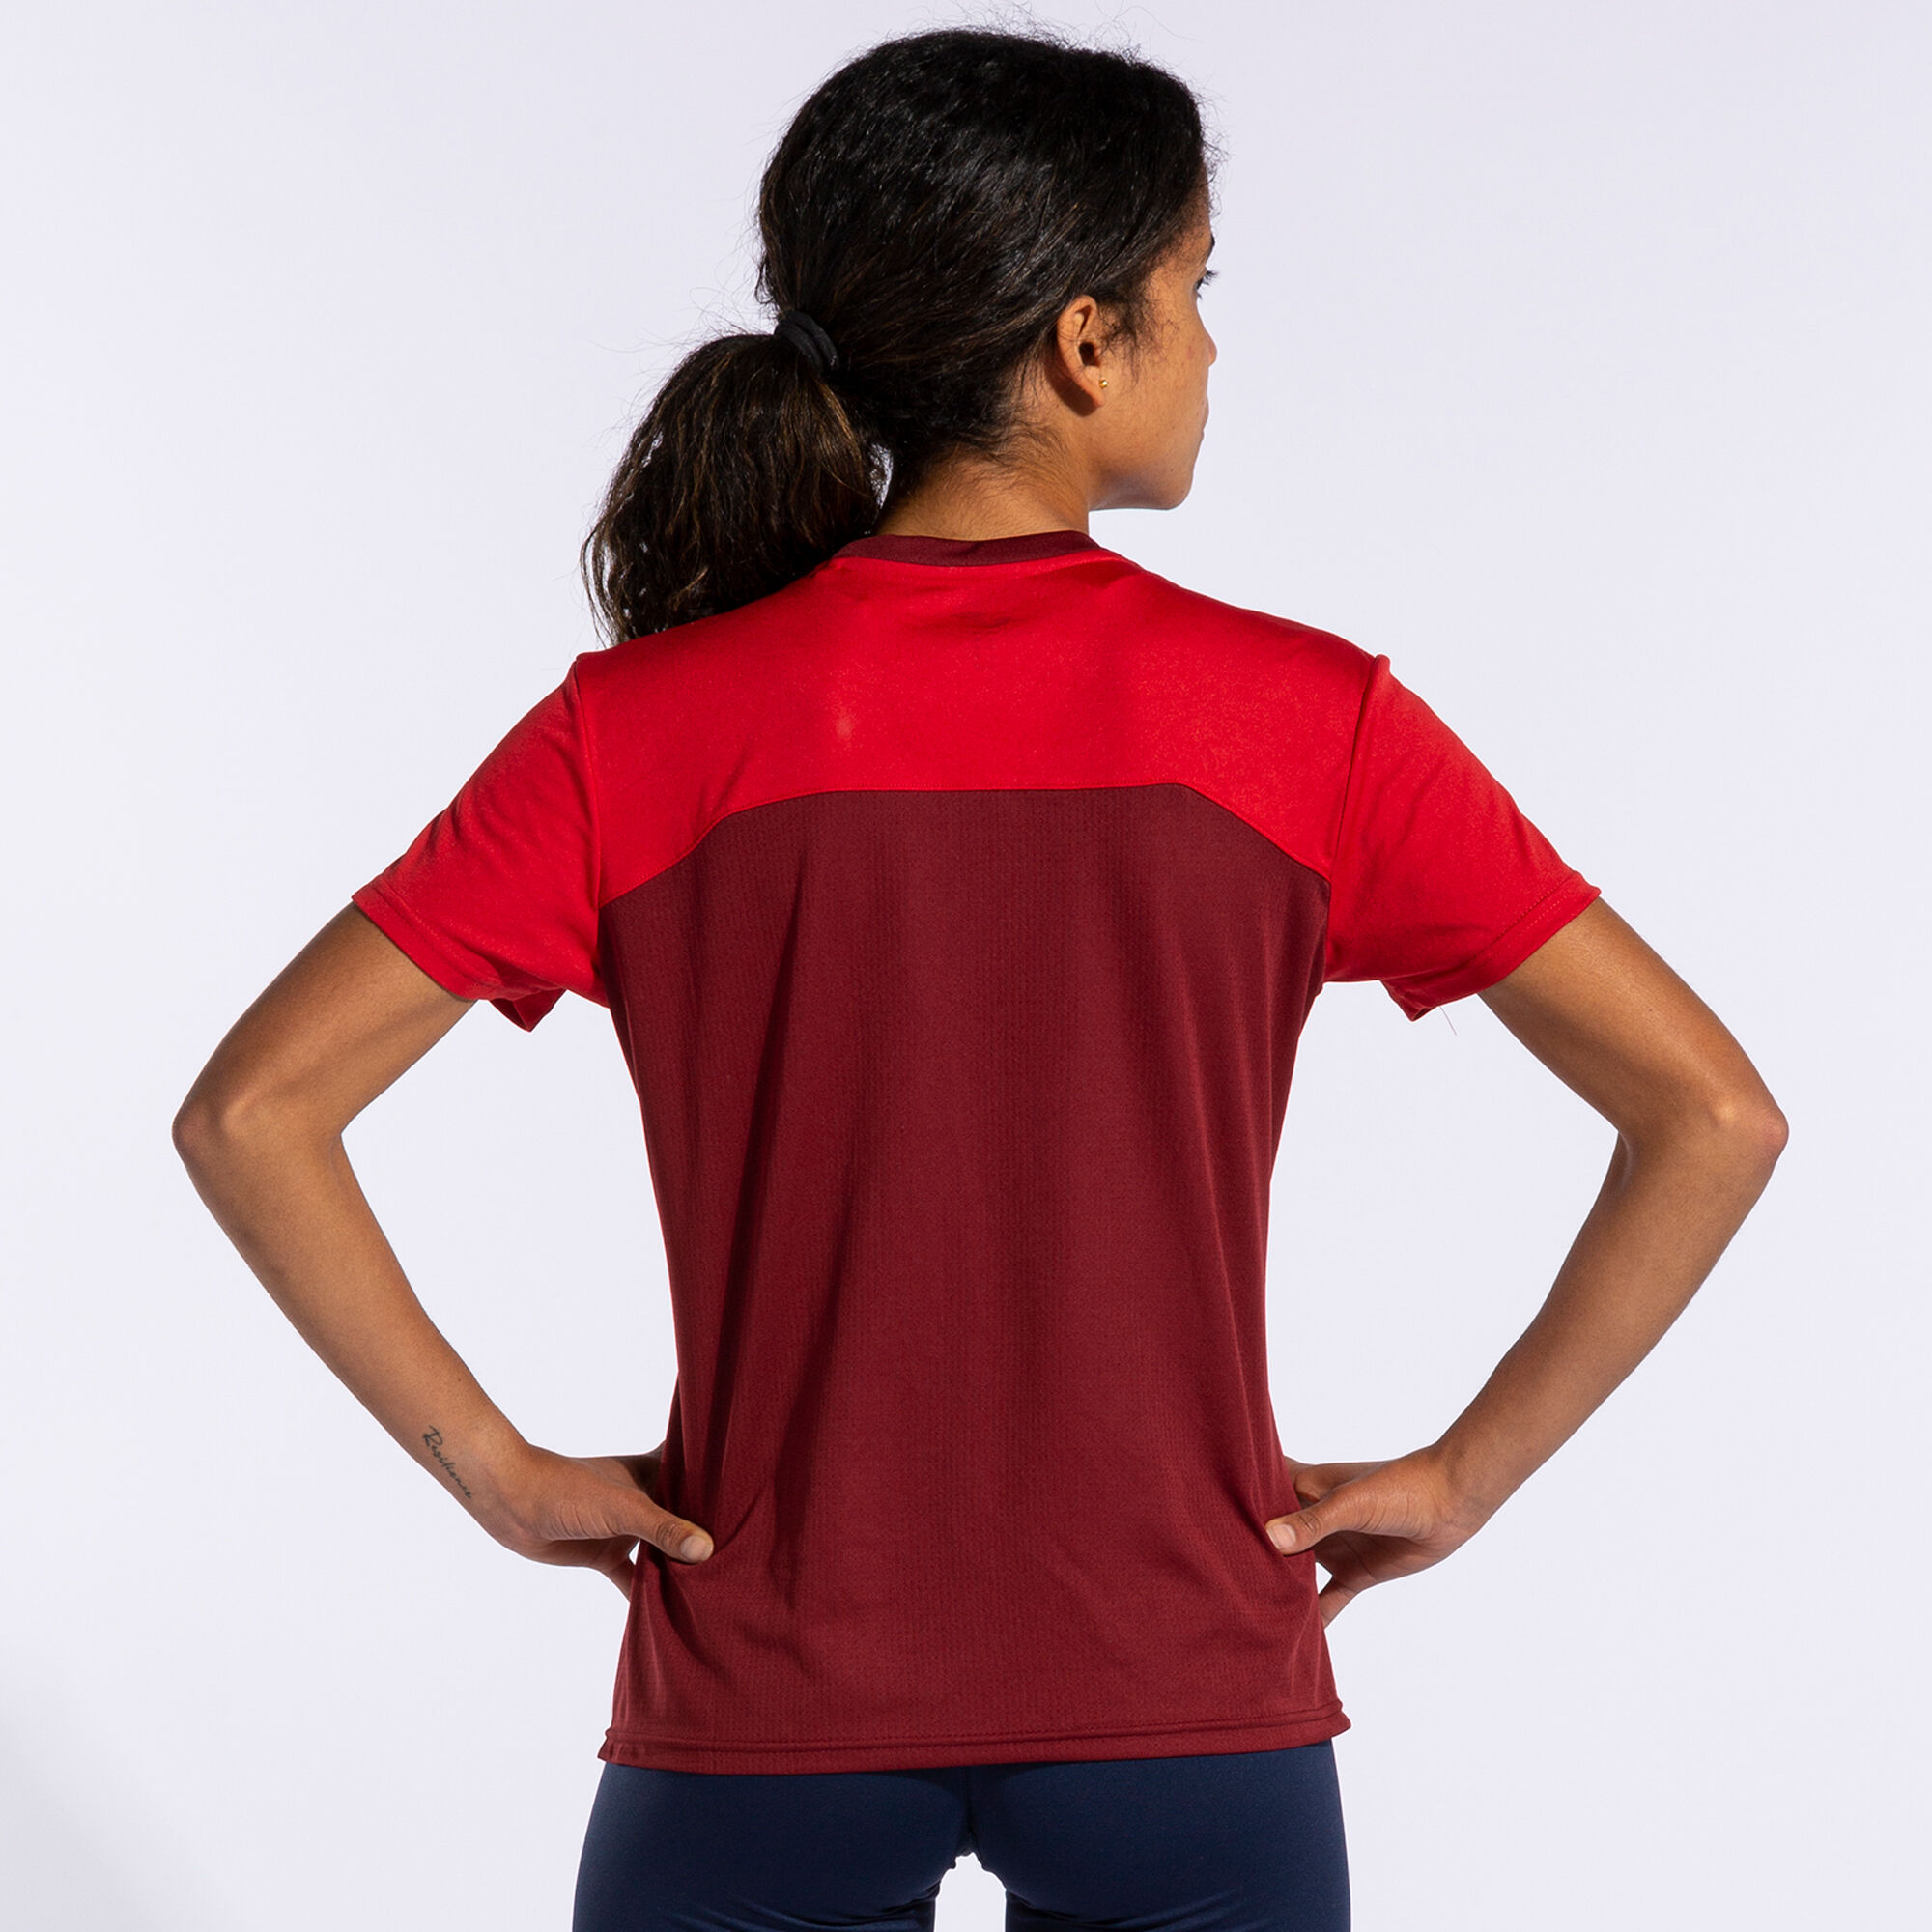 Joma Camiseta Deportiva para Mujer de Manga Corta y Cuello Redondo